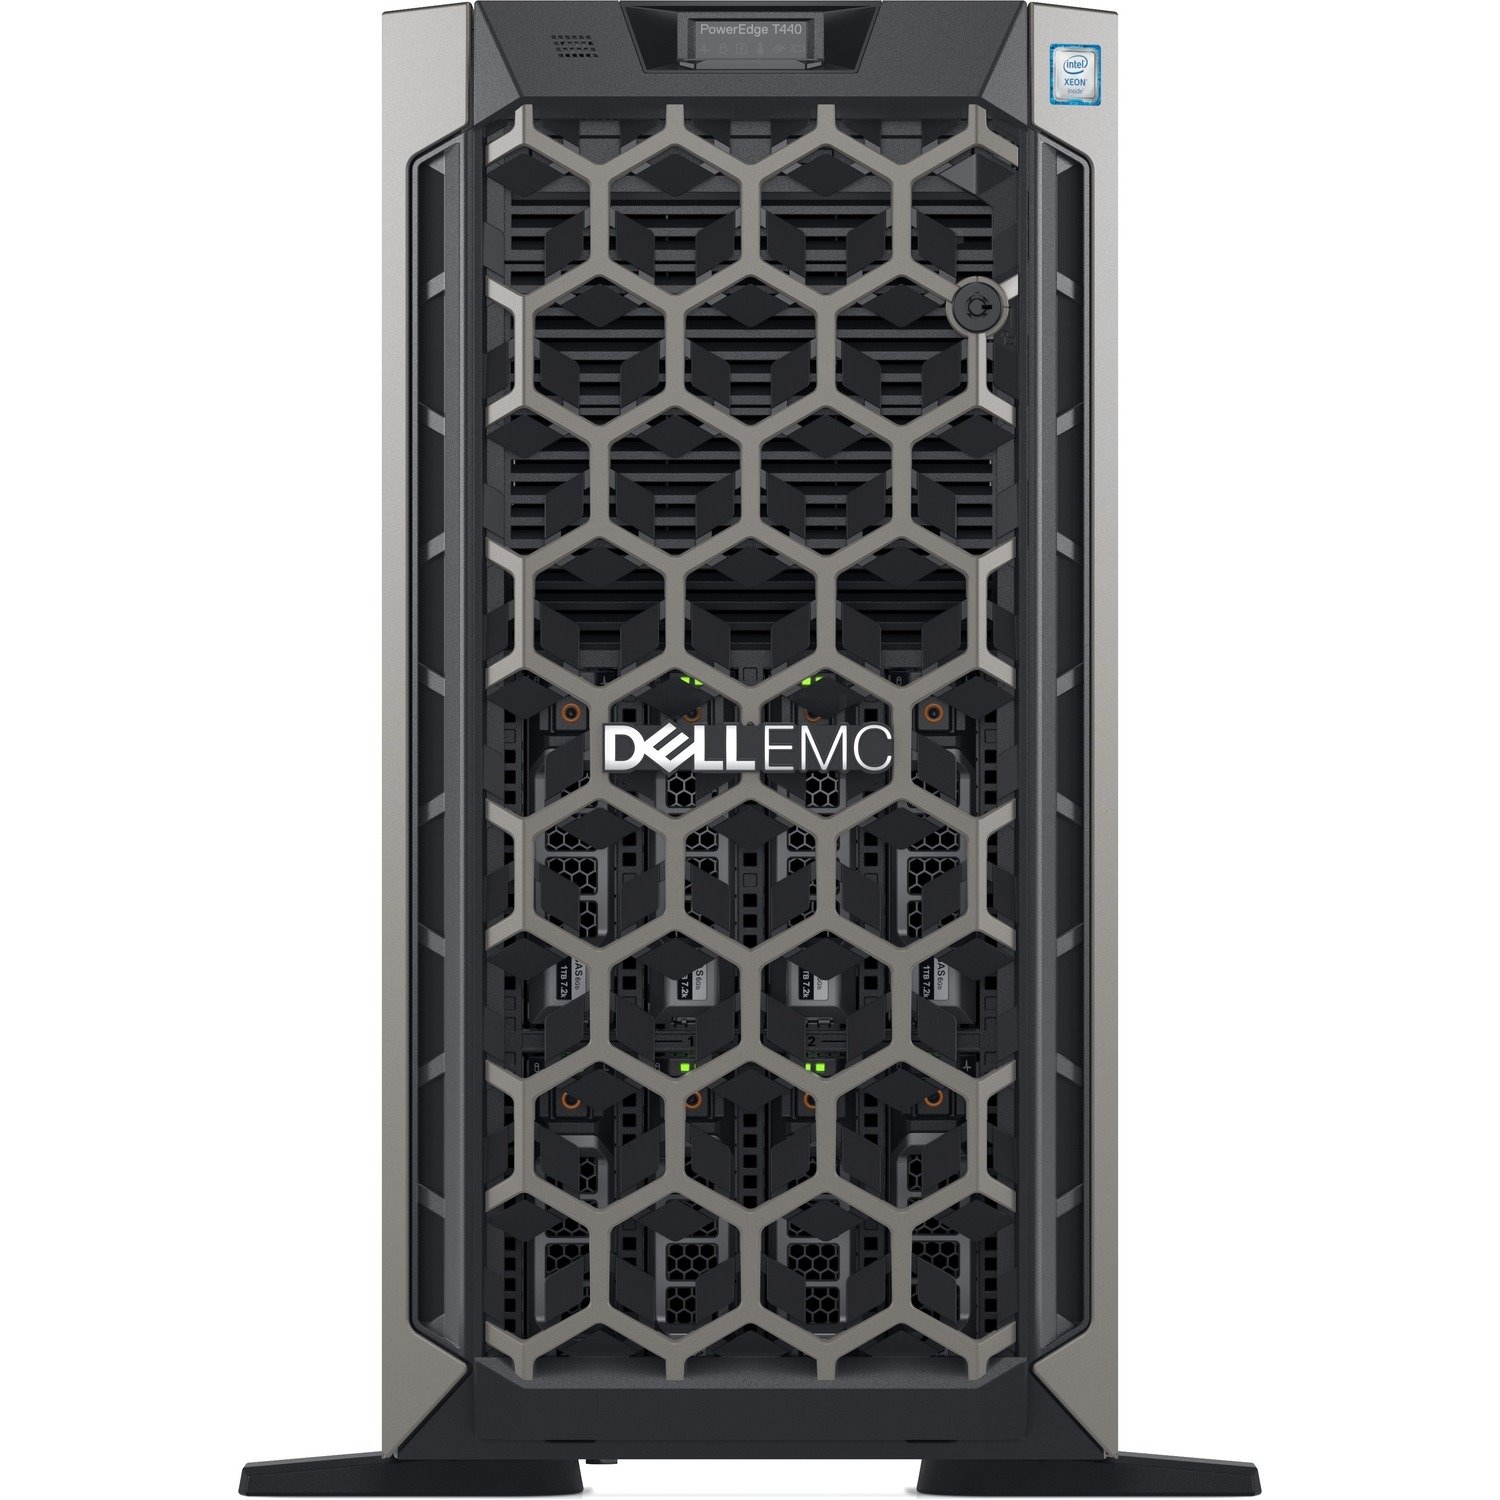 Dell EMC PowerEdge T440 5U Tower Server - 1 x Intel Xeon Silver 4208 - 16 GB RAM - 1 TB HDD - (1 x 1TB) HDD Configuration - 12Gb/s SAS, Serial ATA Controller